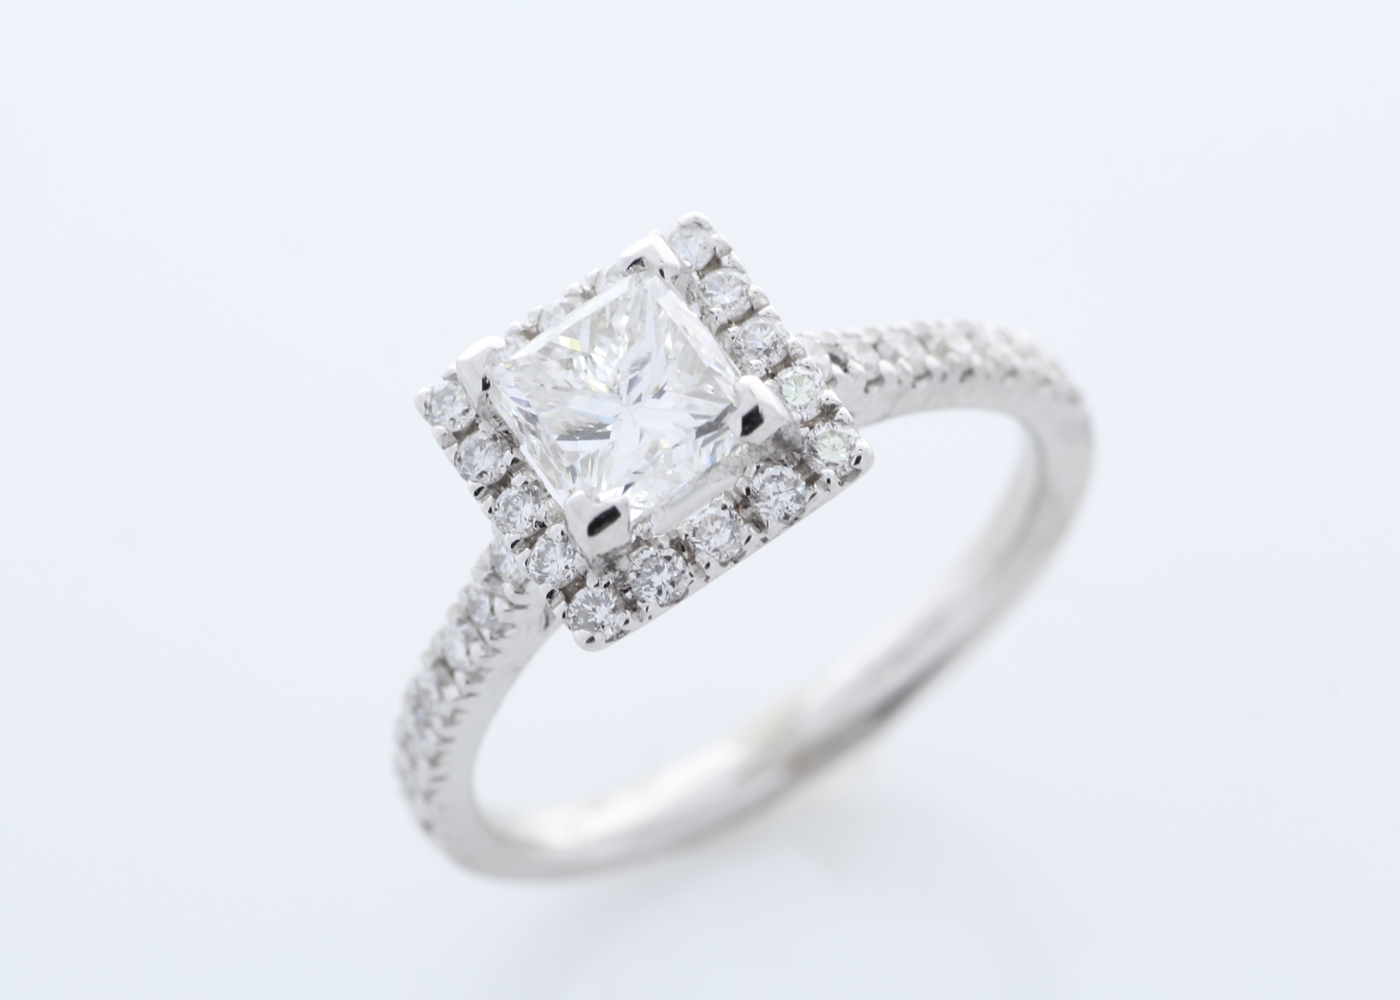 18ct White Gold Halo Set Princess Cut Diamond Ring 1.36 Carats - Image 5 of 6